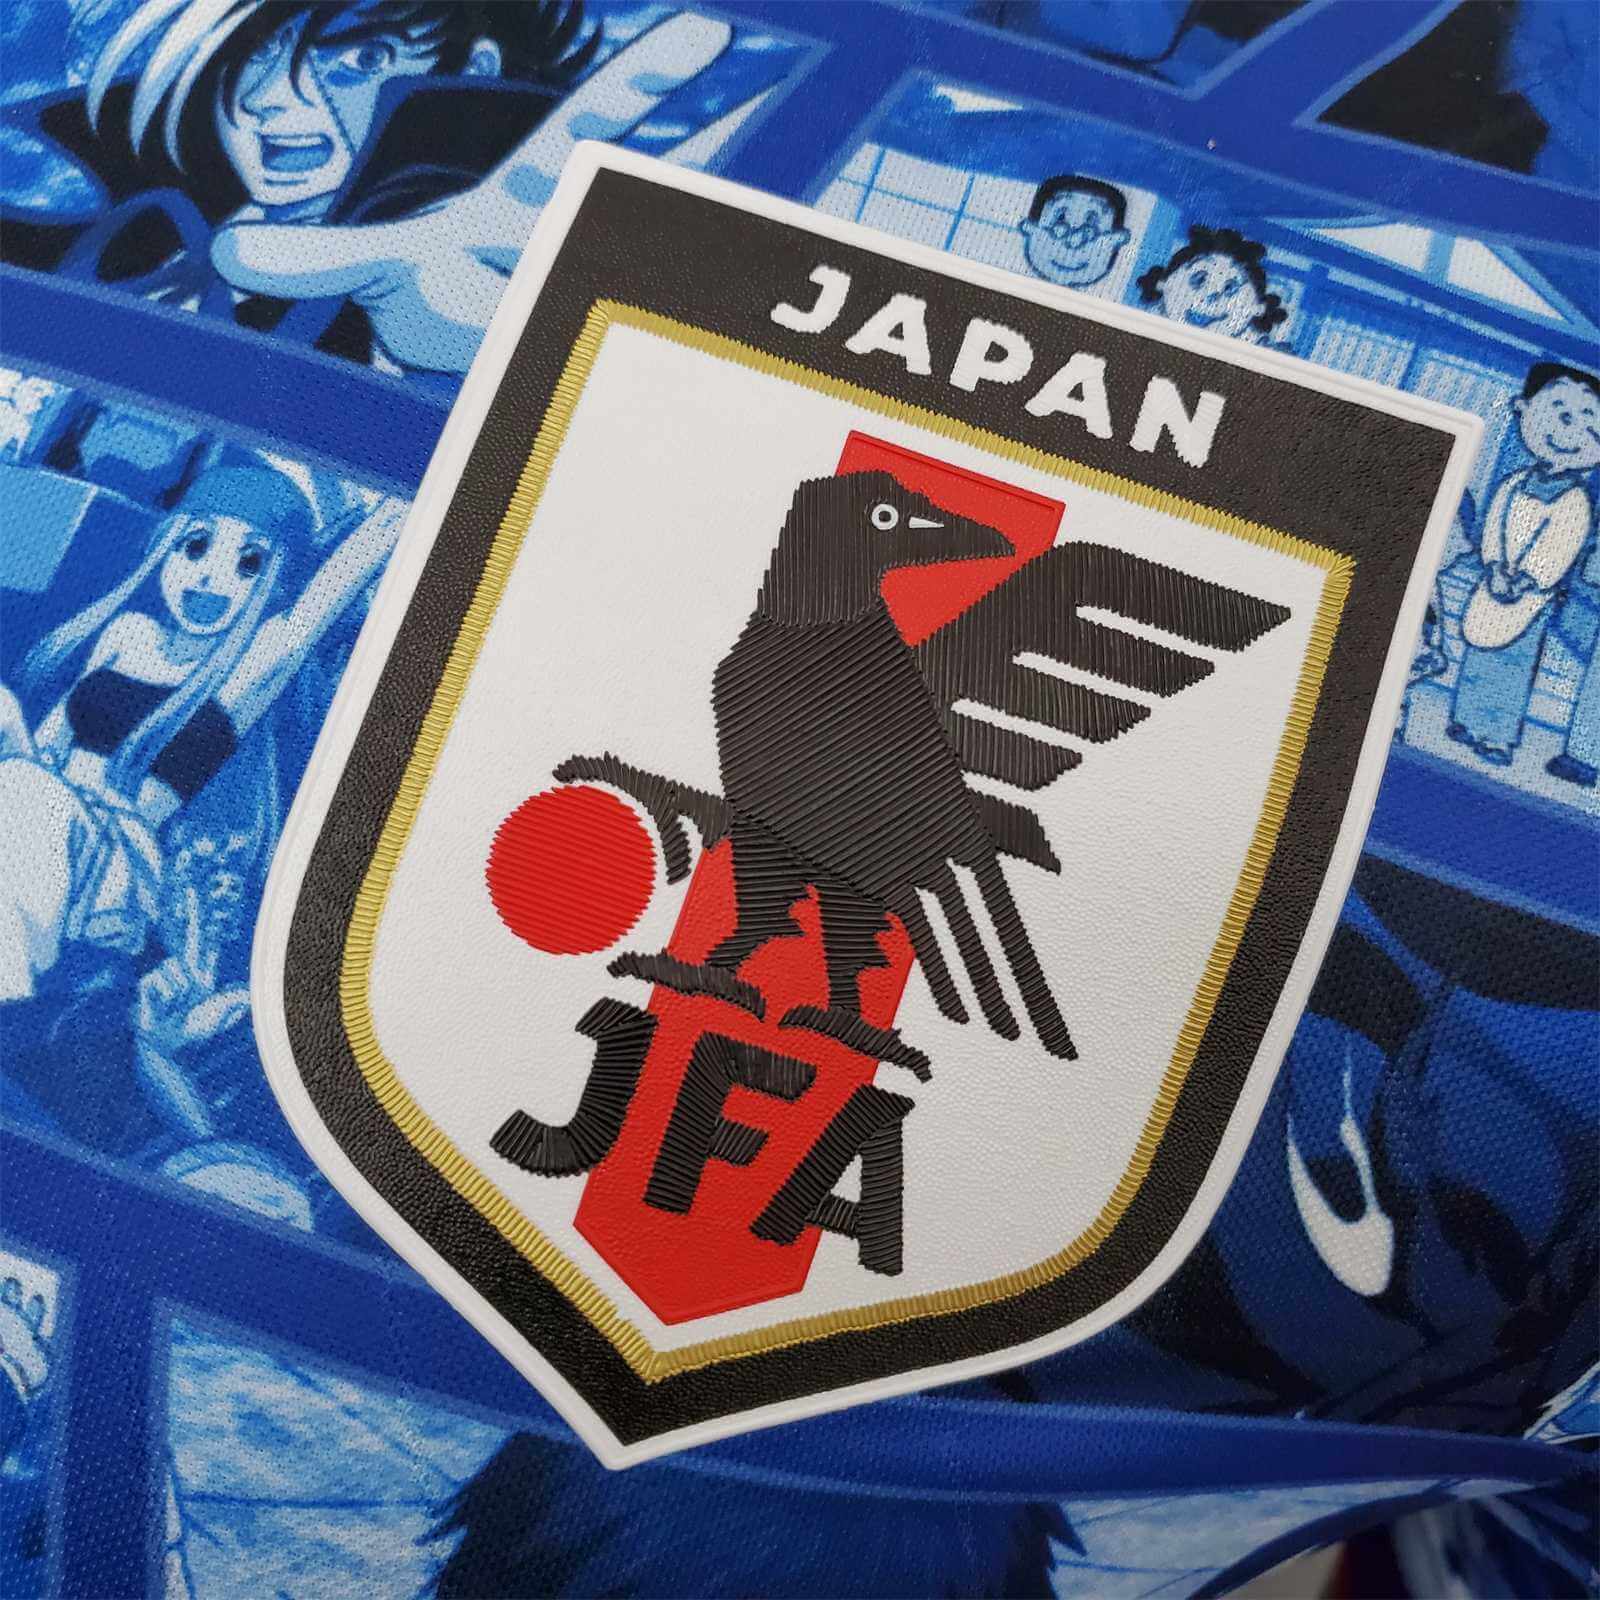 Japan Anime Football - Shop Online - Etsy